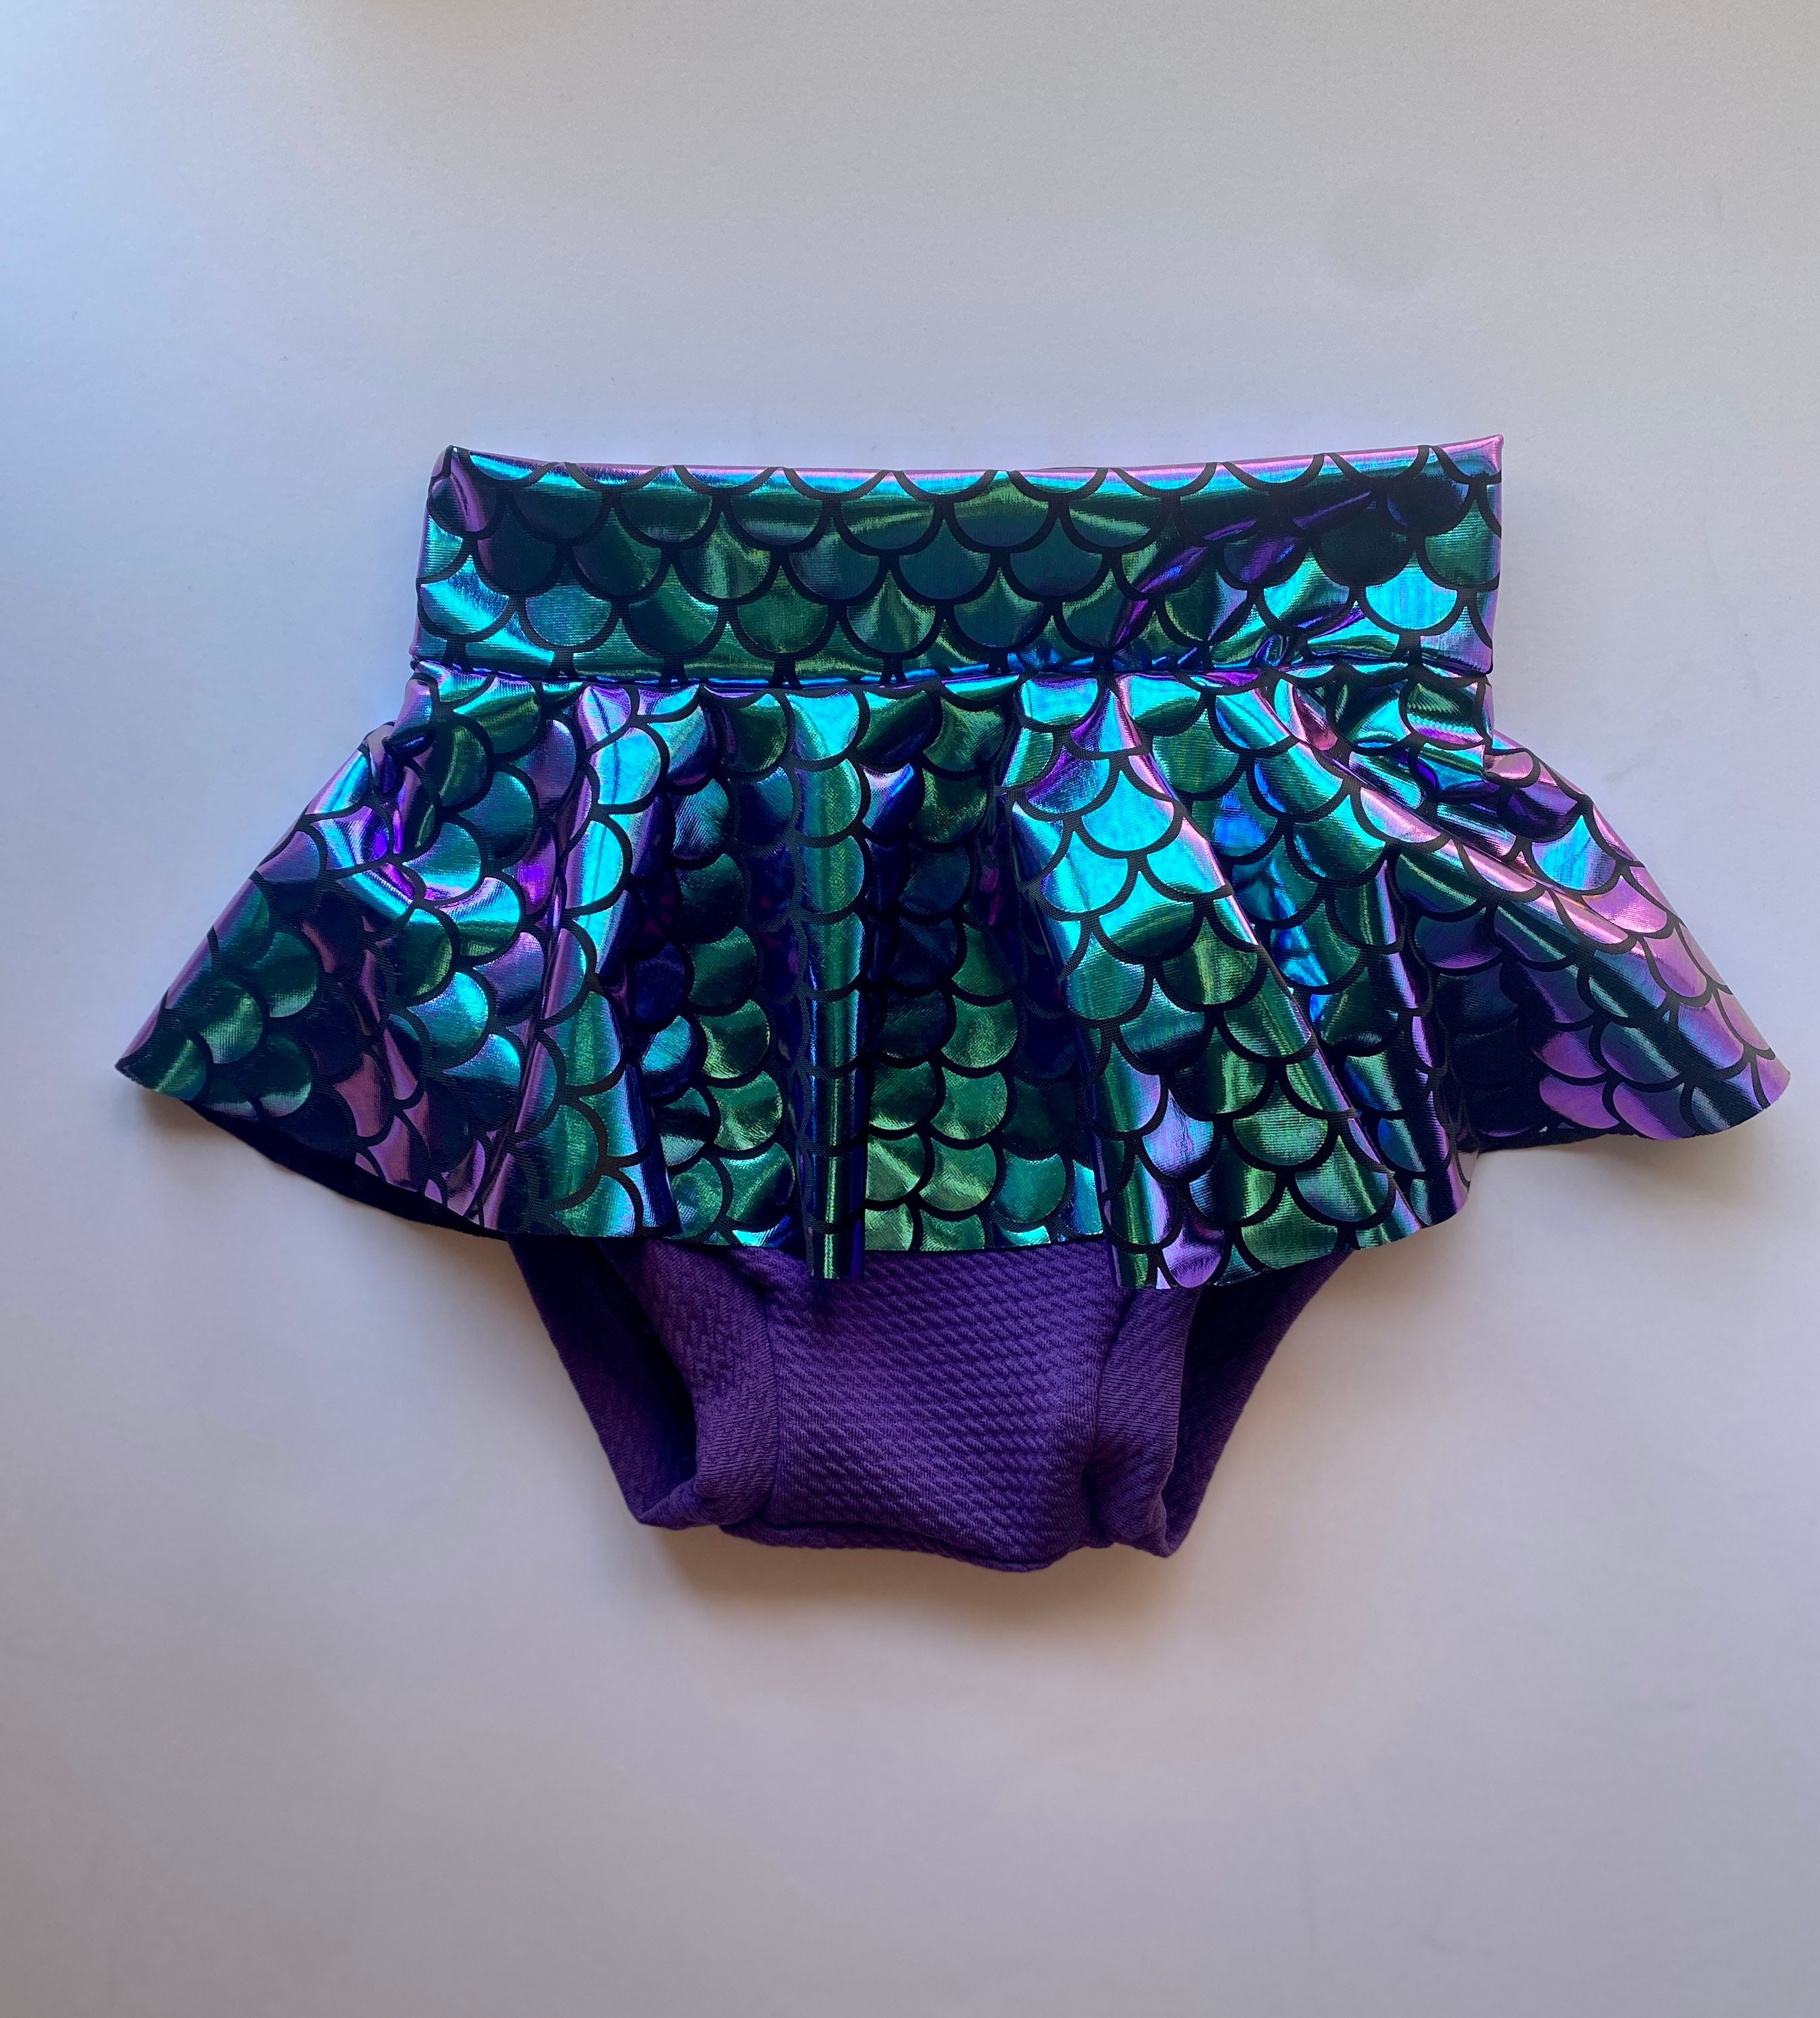 Mermaid Underwear -  Canada